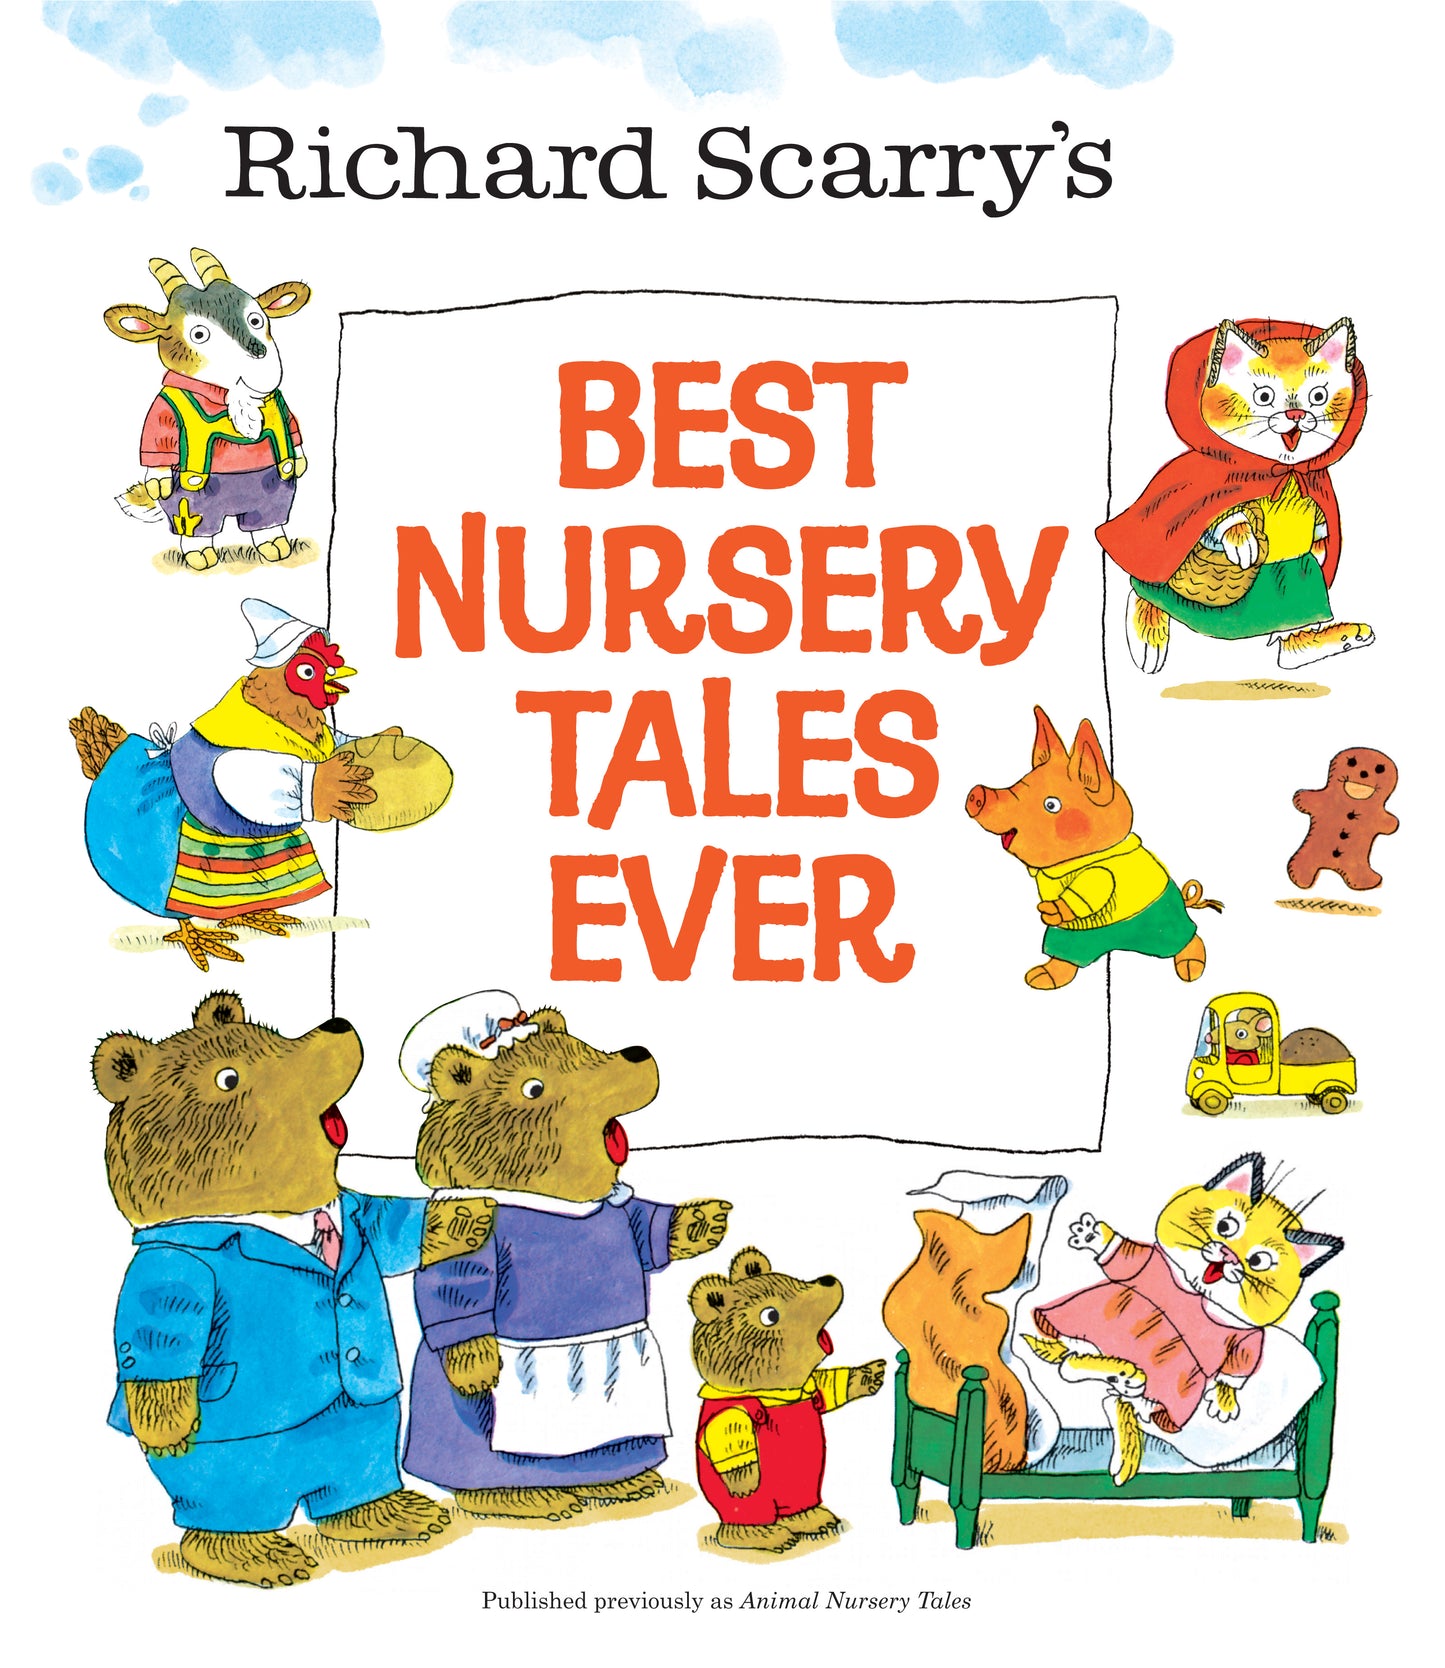 Richard Scarry's Best Nursery Tales Ever